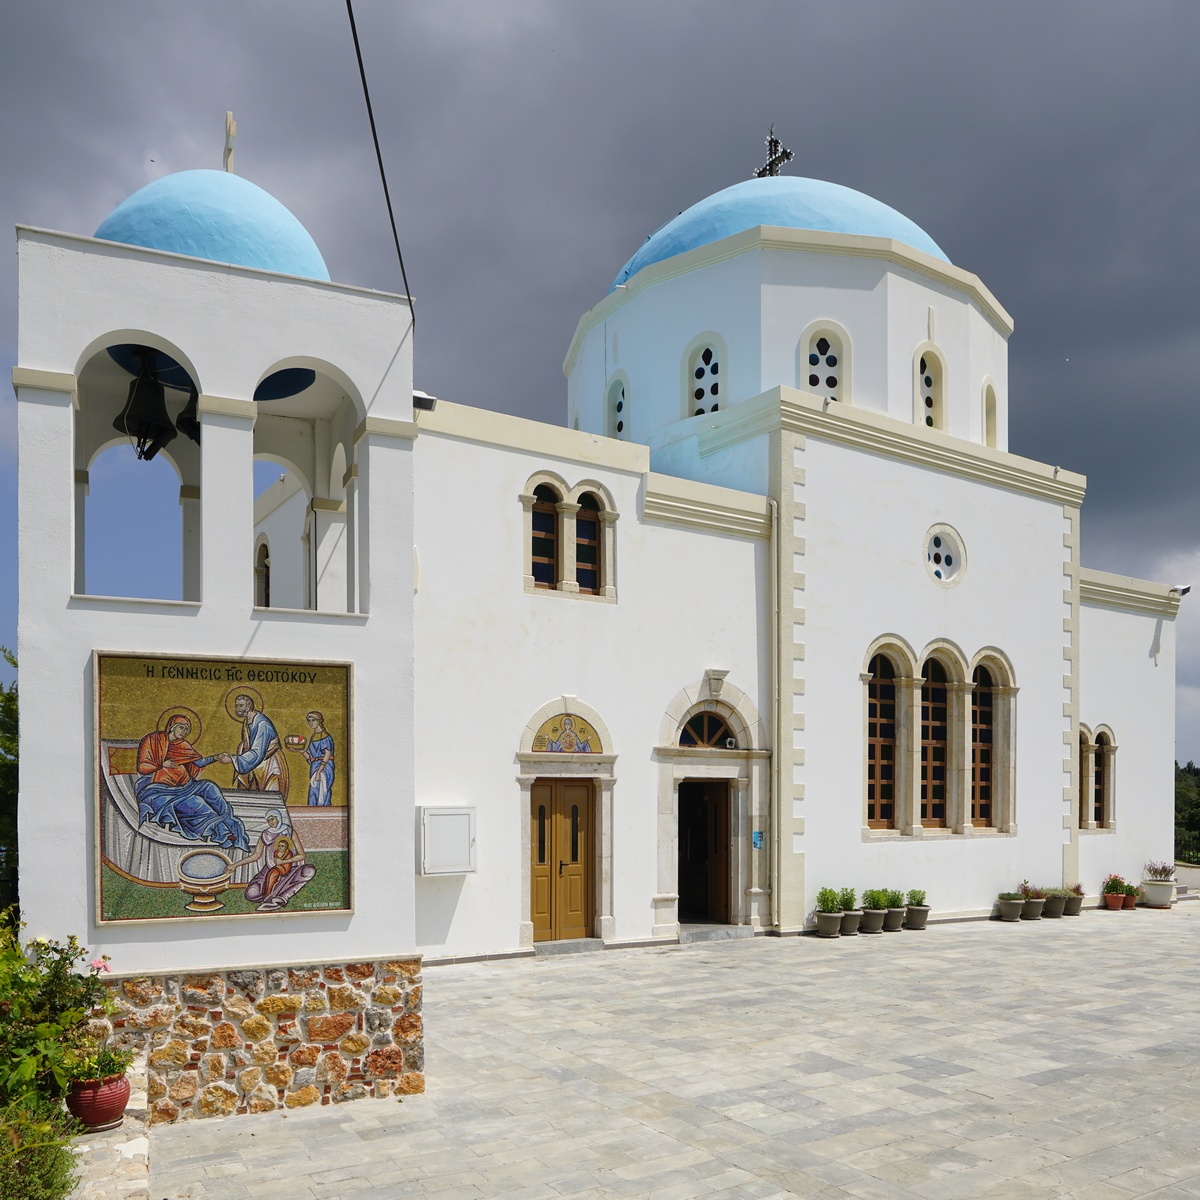 Kirche Mariä Geburt (Genésio tis Theotókou) in Lagoúdi auf Kos